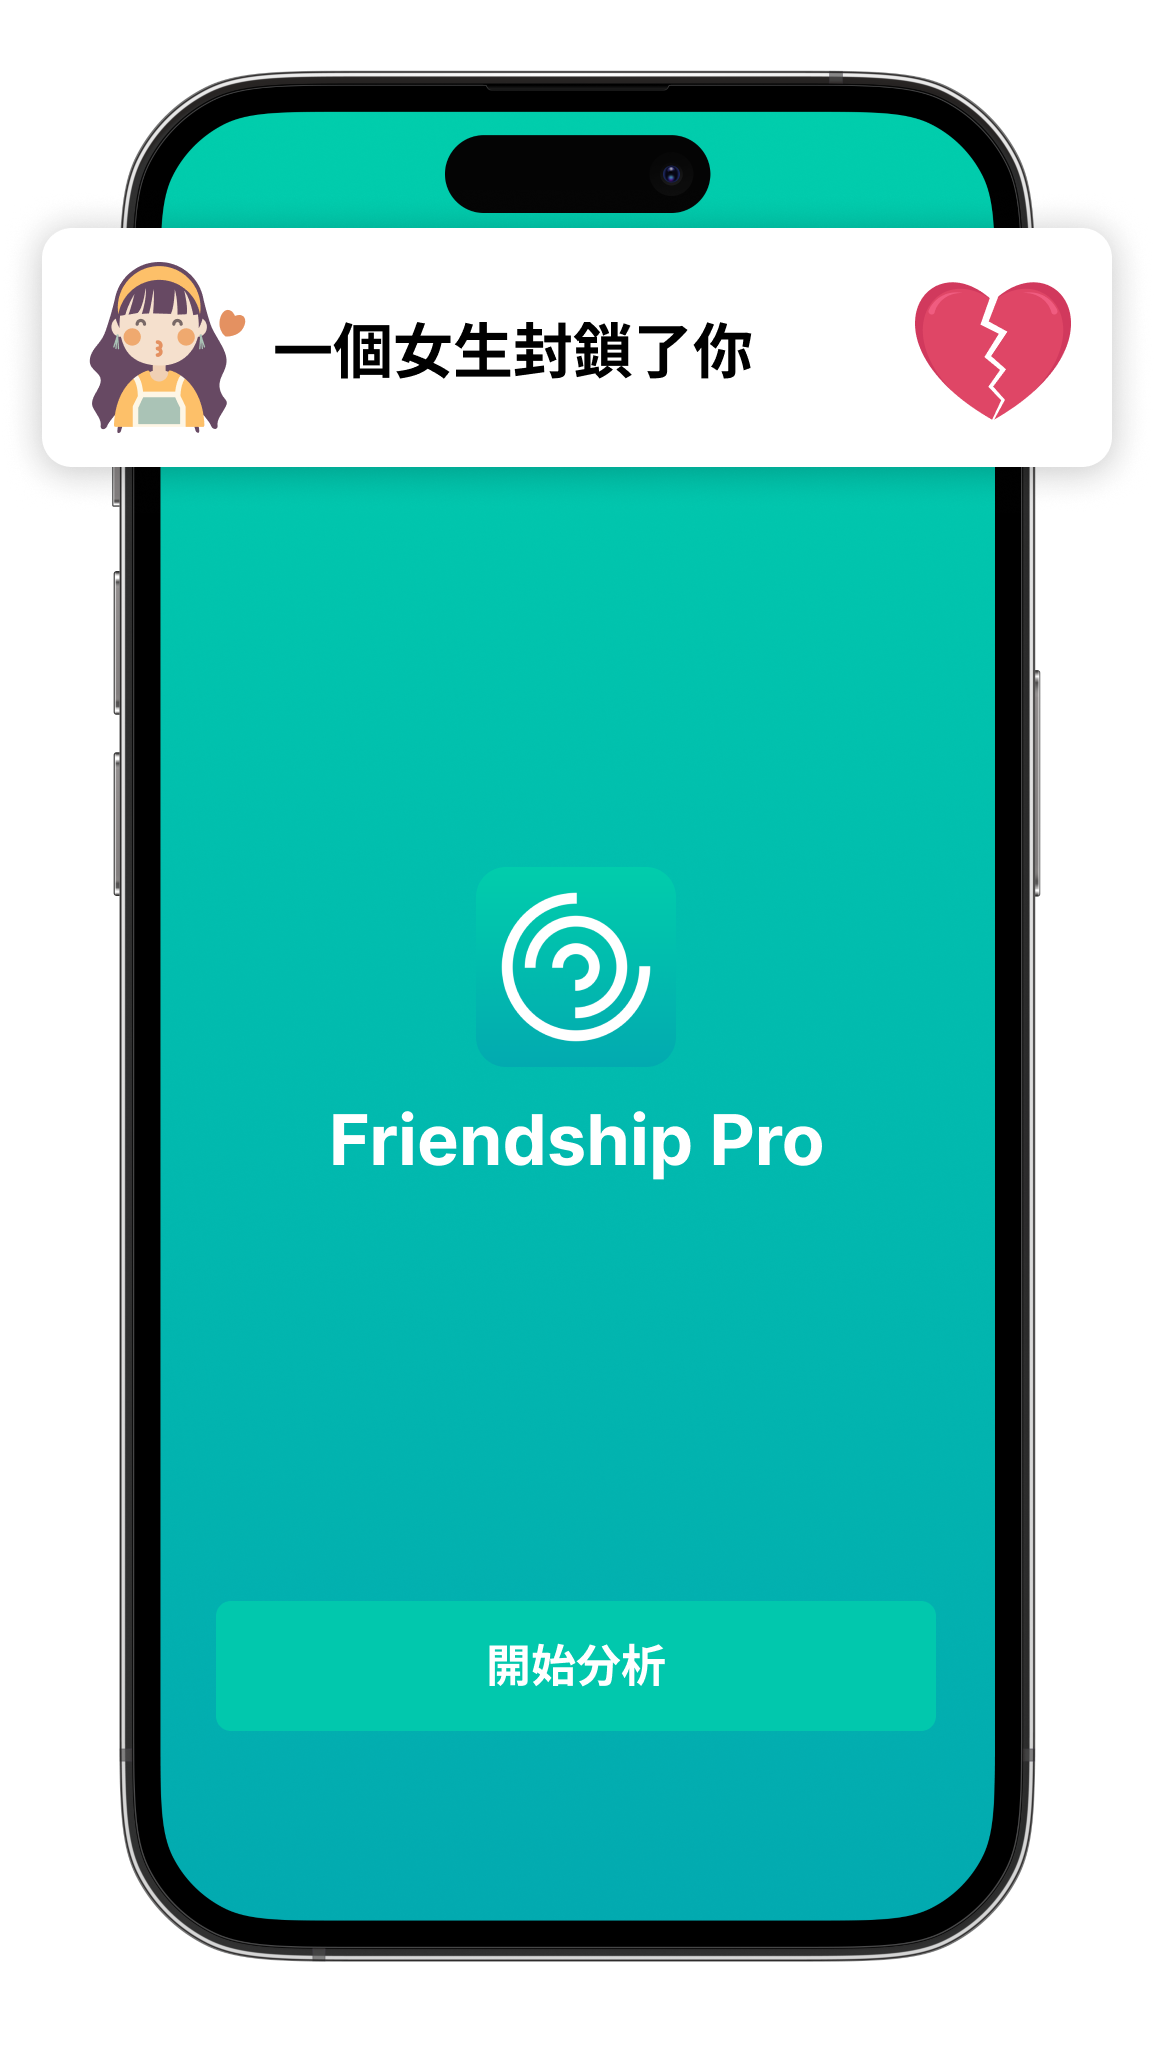 Friendships Pro